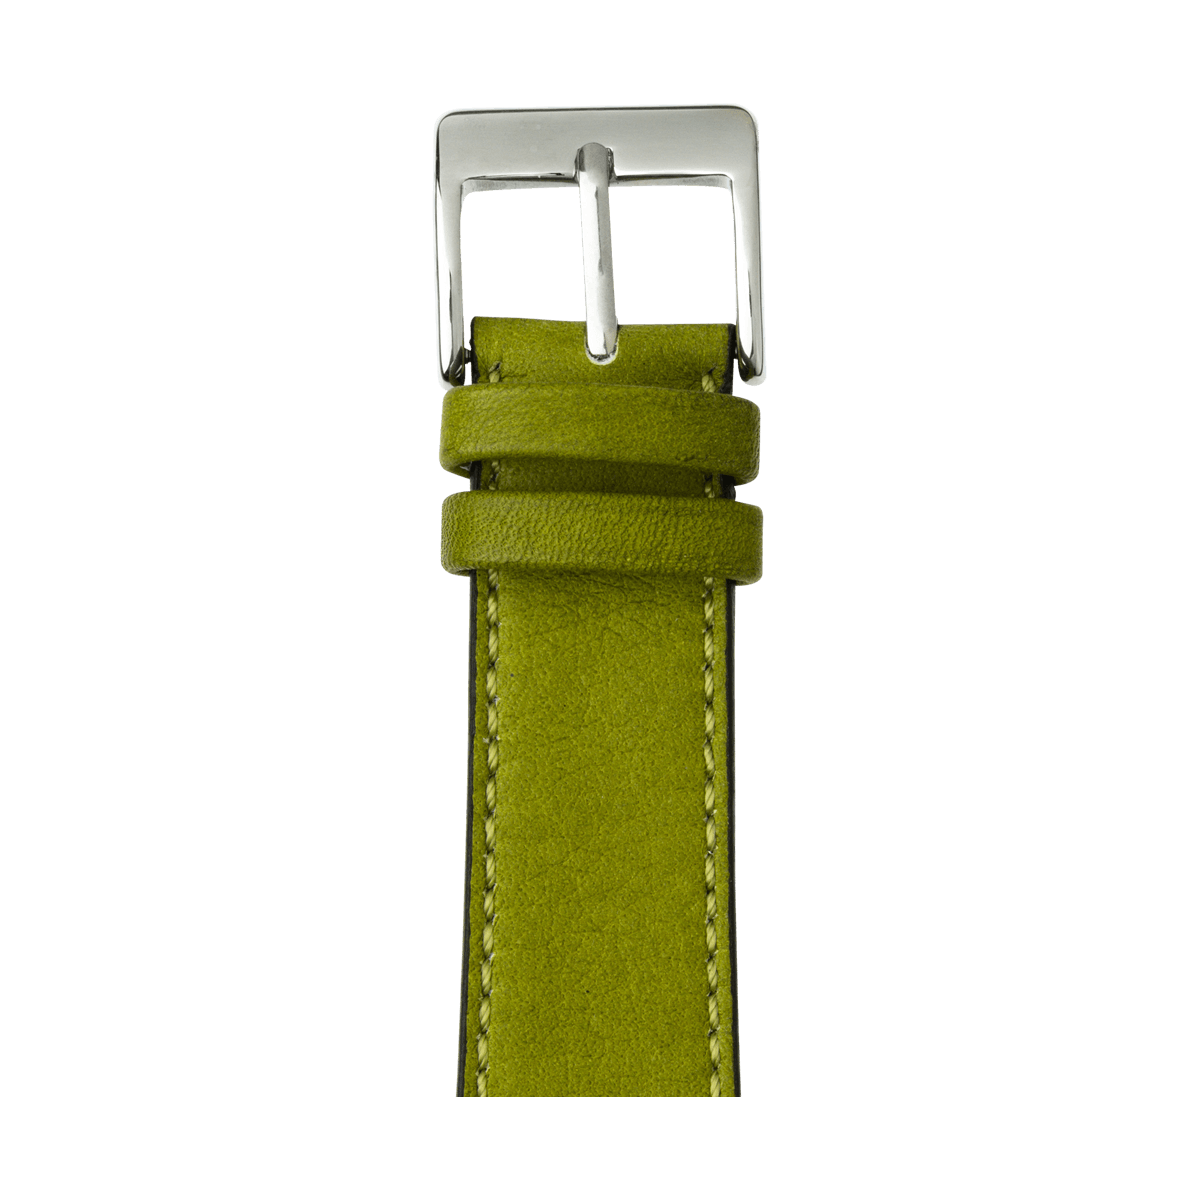 Sauvage Leder Armband in Moosgrün - bracebuds